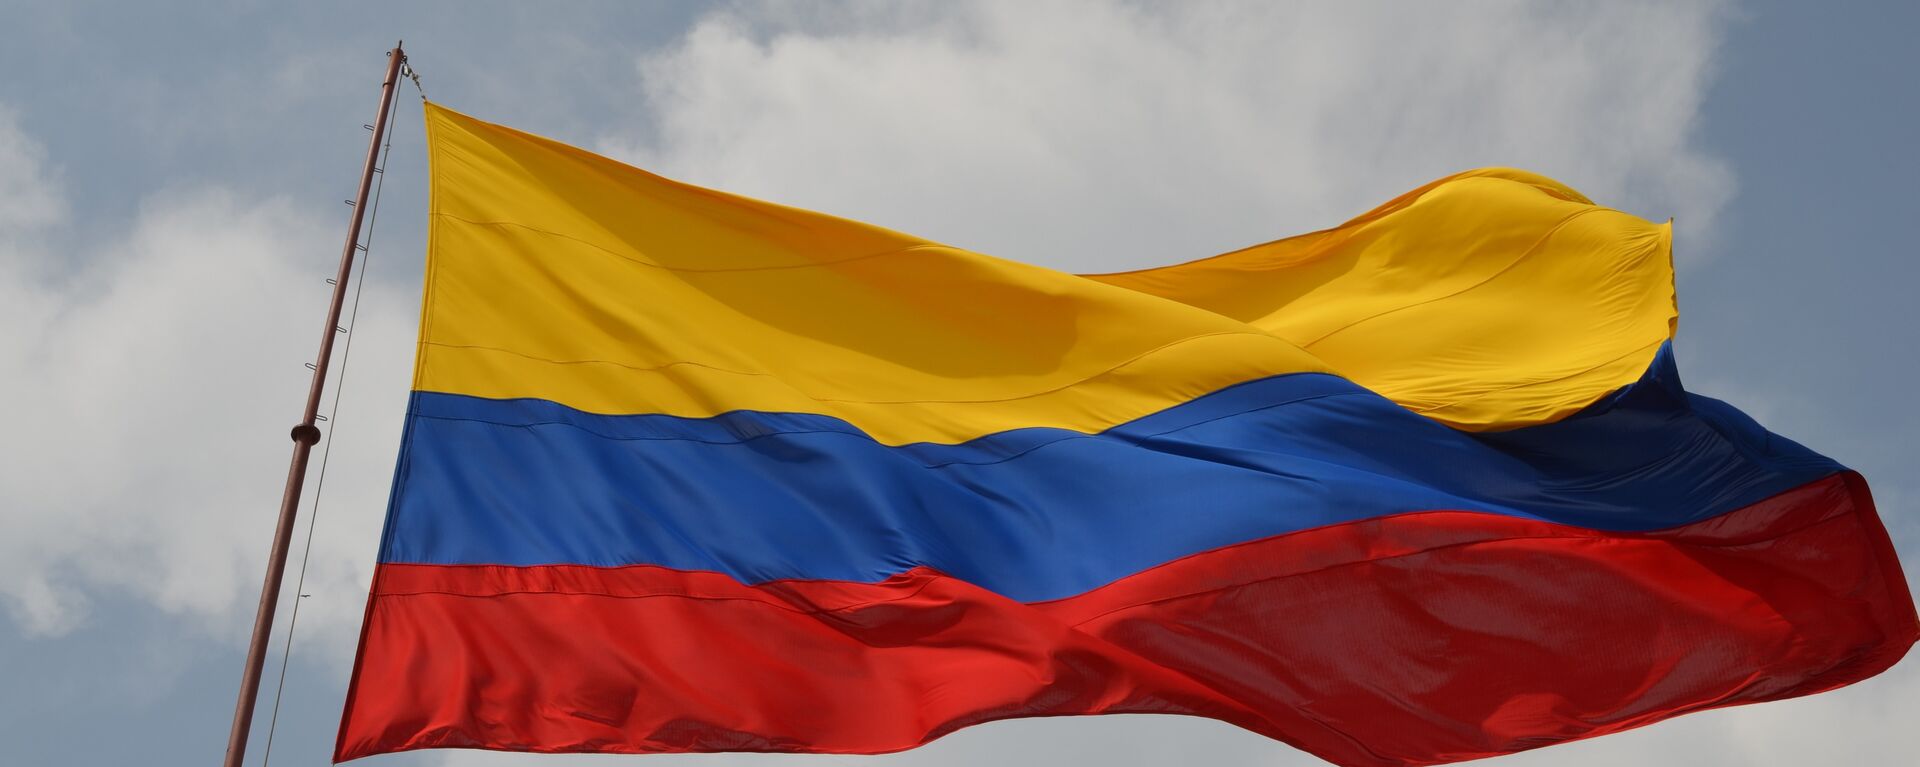 Bandera de Colombia - Sputnik Mundo, 1920, 22.11.2021